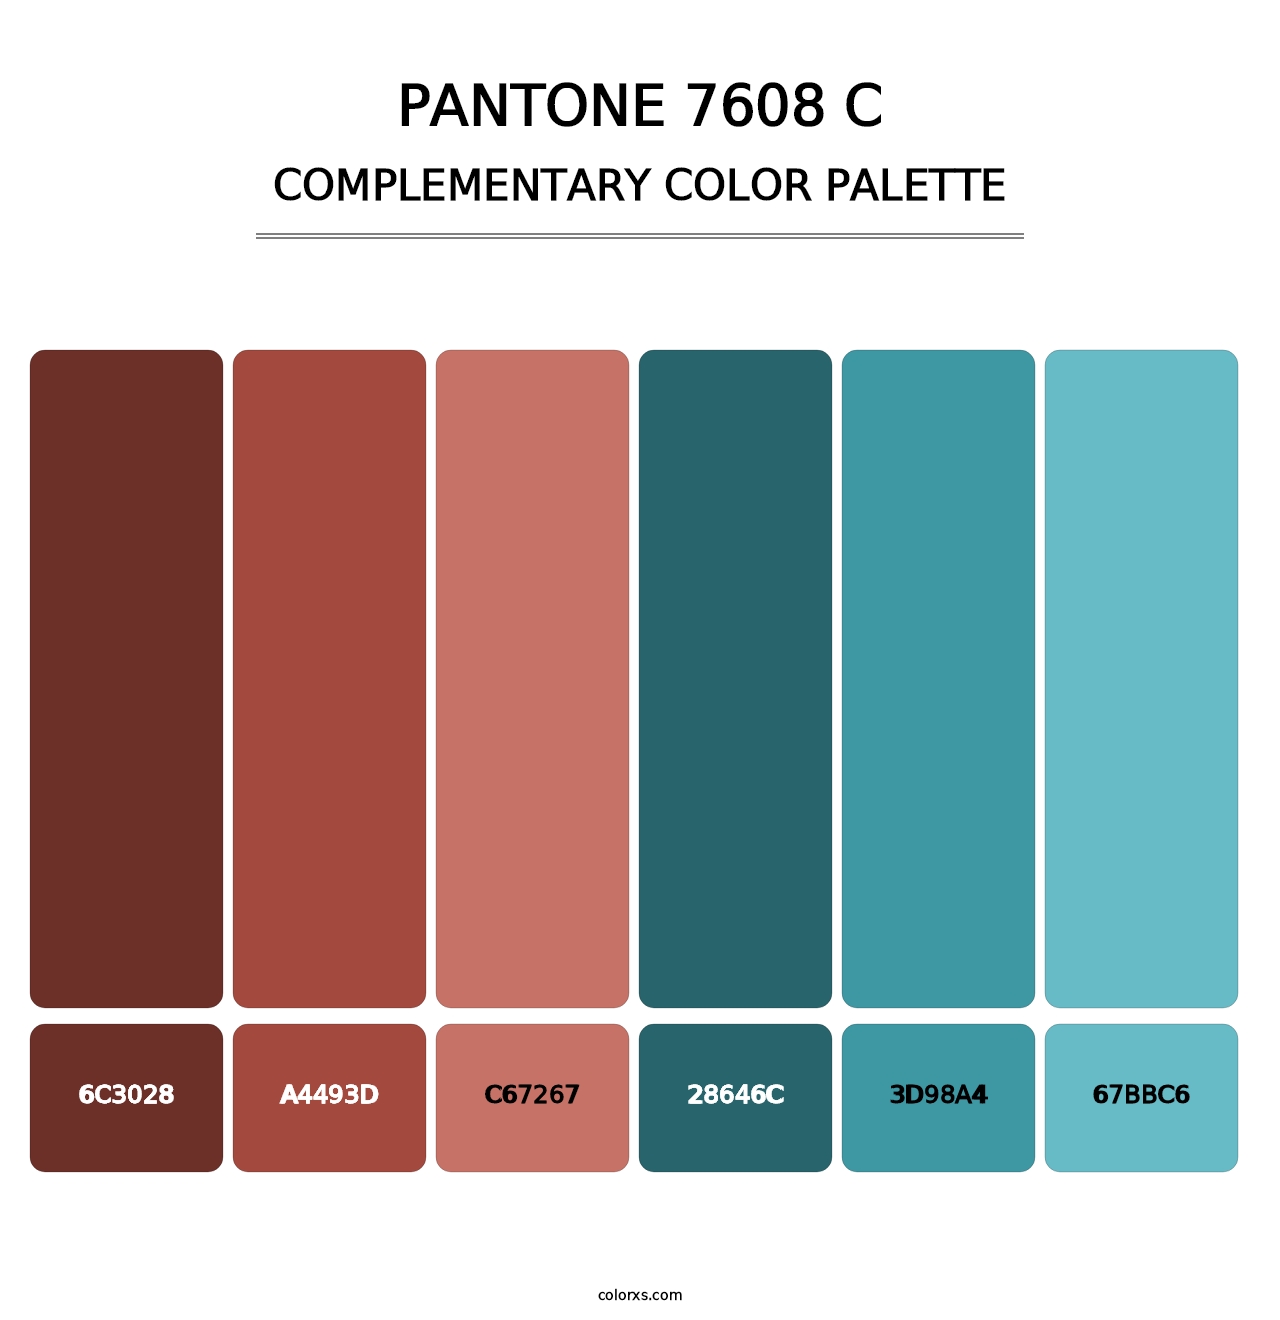 PANTONE 7608 C - Complementary Color Palette